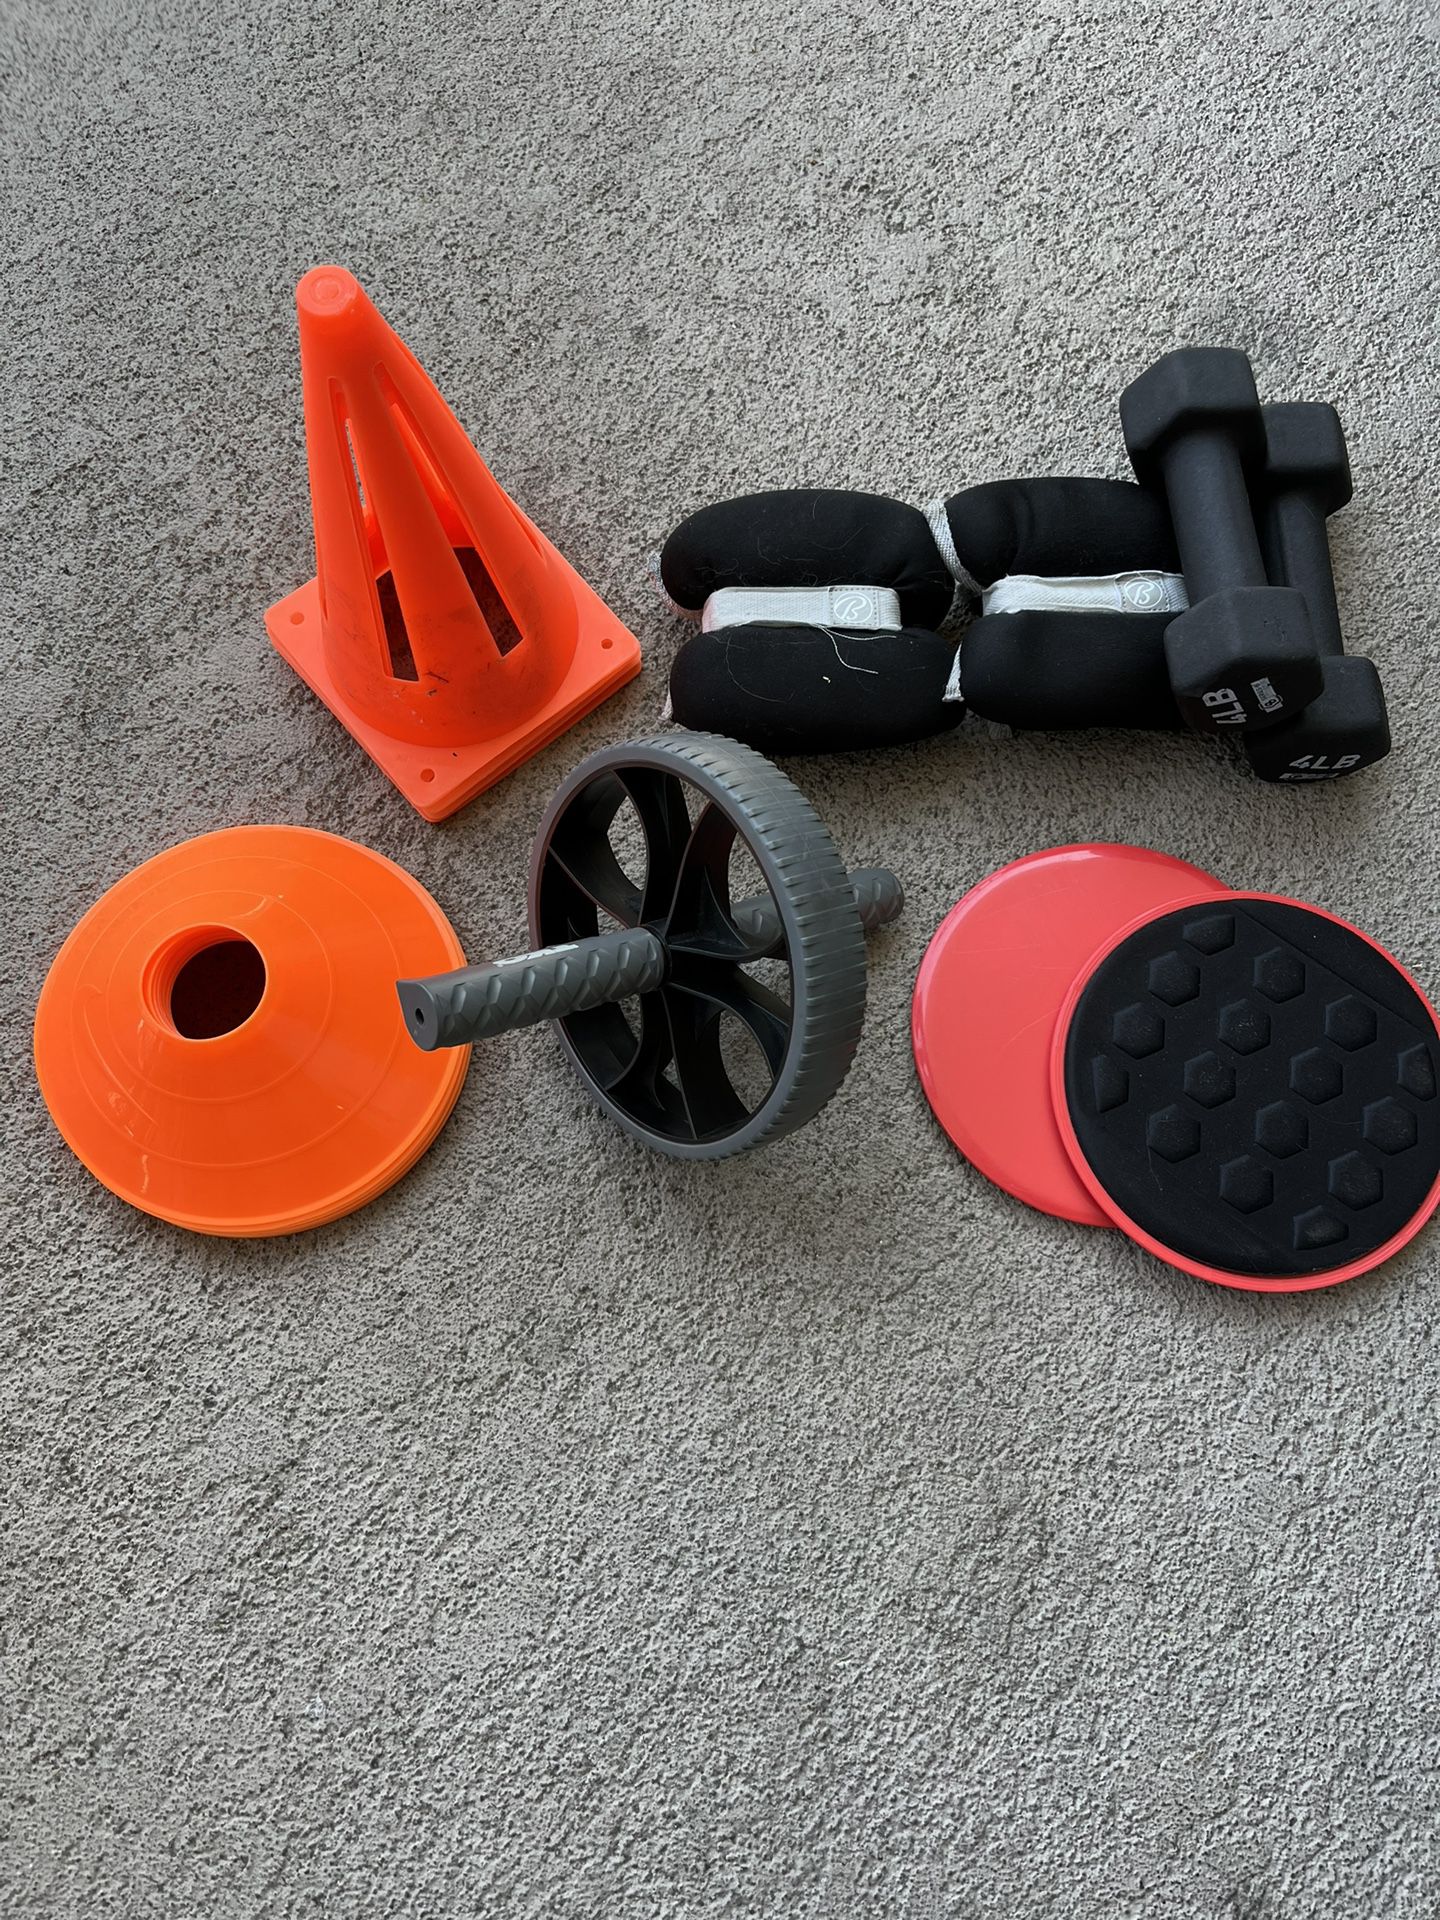 Workout Equipment Bundle